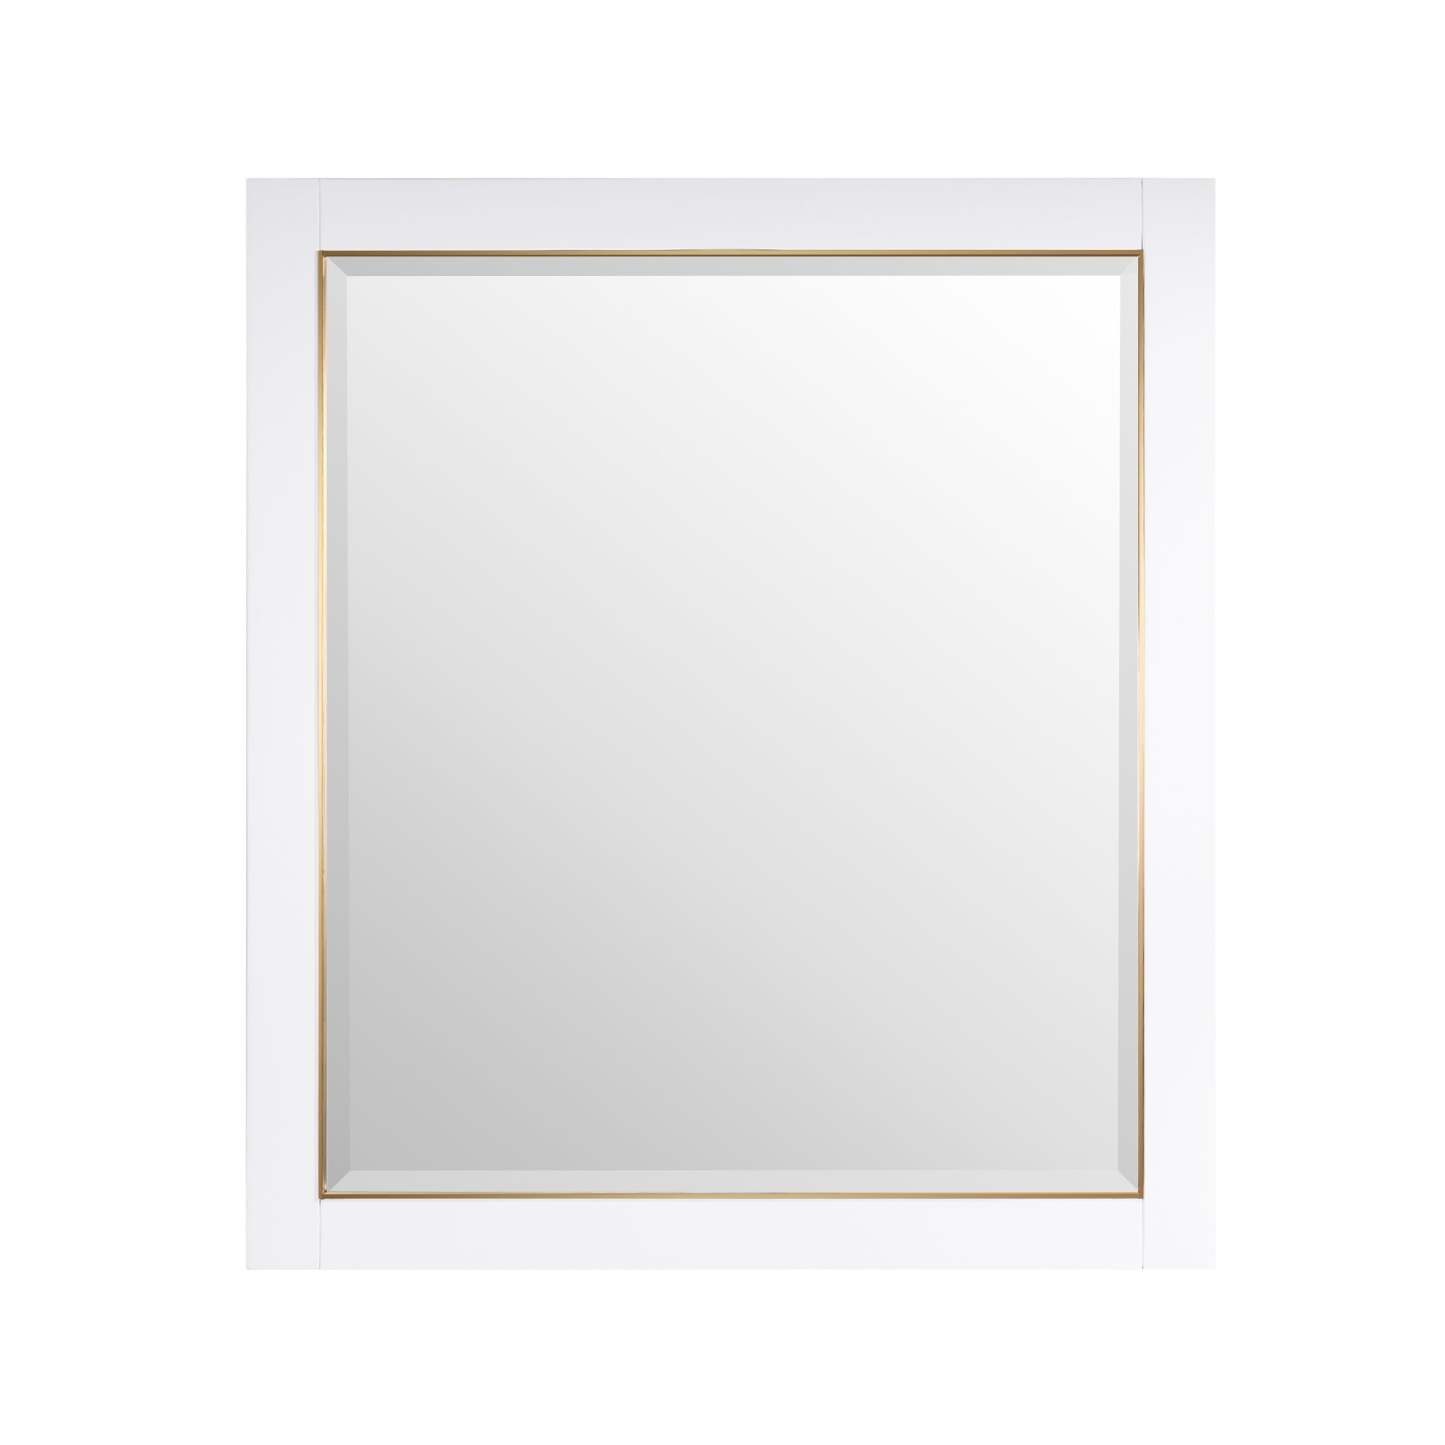 28 in. W x 32 in. H Framed Rectangular Beveled Edge Bathroom Vanity Mirror-Arrisea